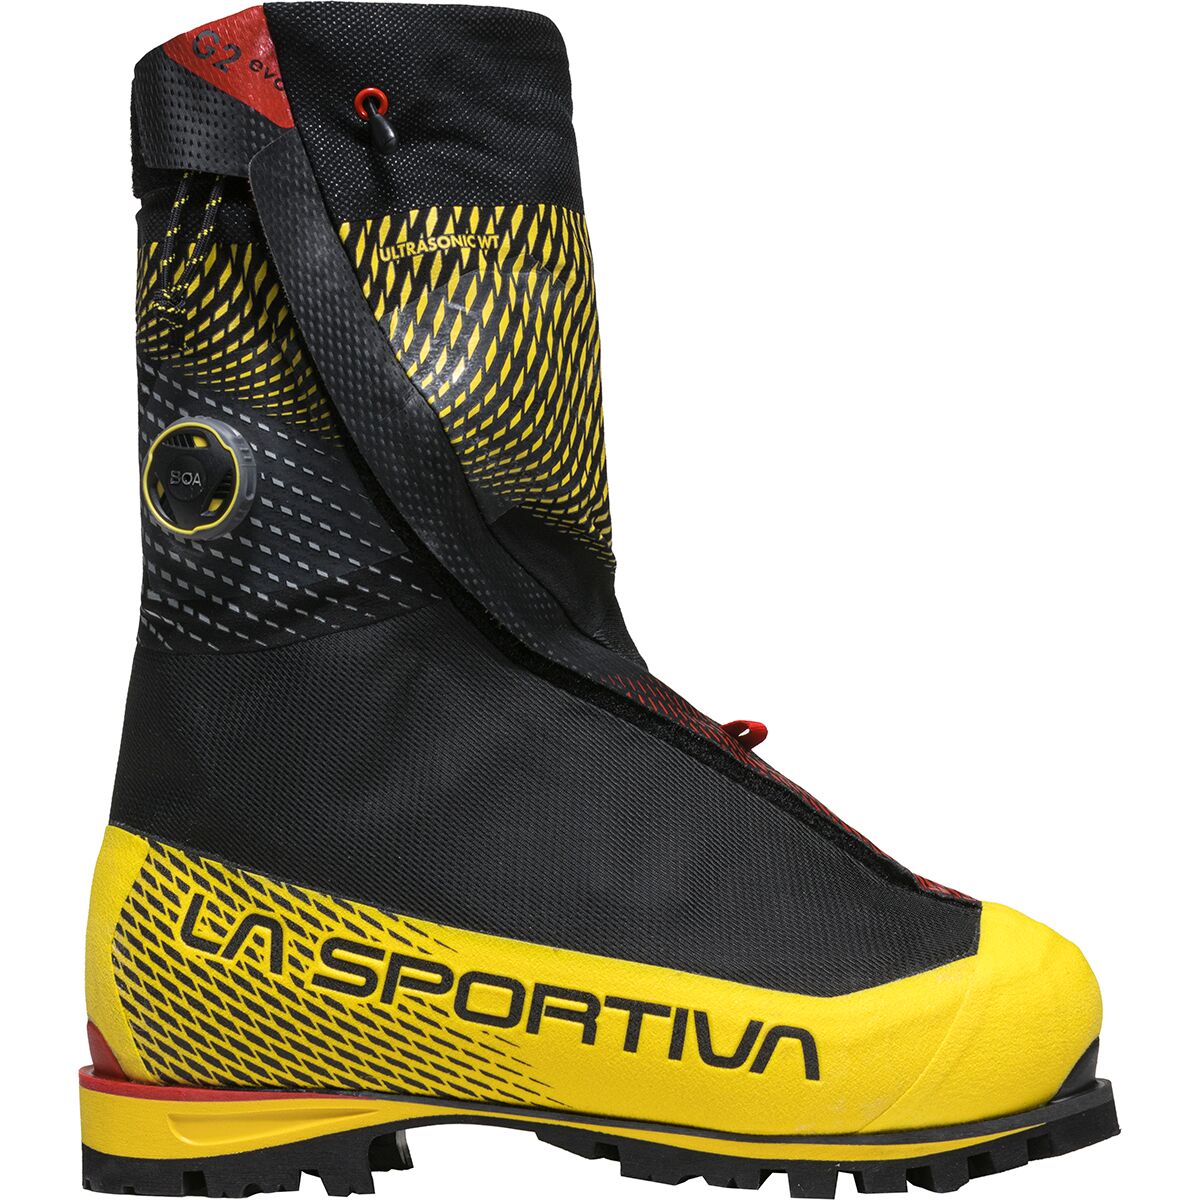 La Sportiva G2 Evo Mountaineering Boot - Men's